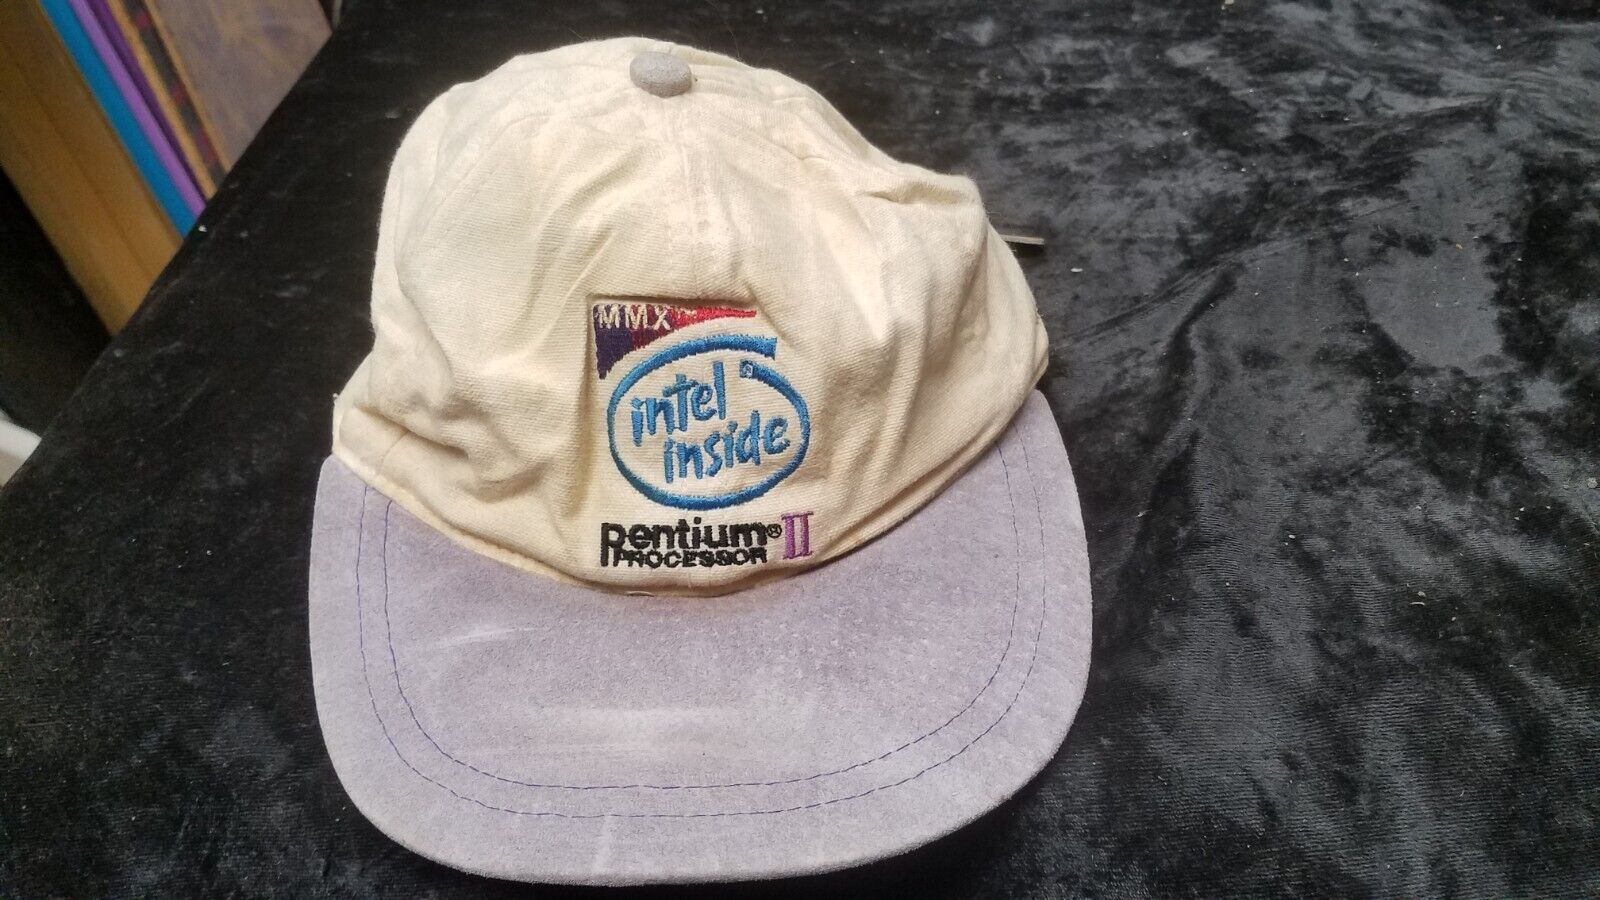 Vintage MMX Intel Inside Pentium II Processor White Baseball Hat Cap